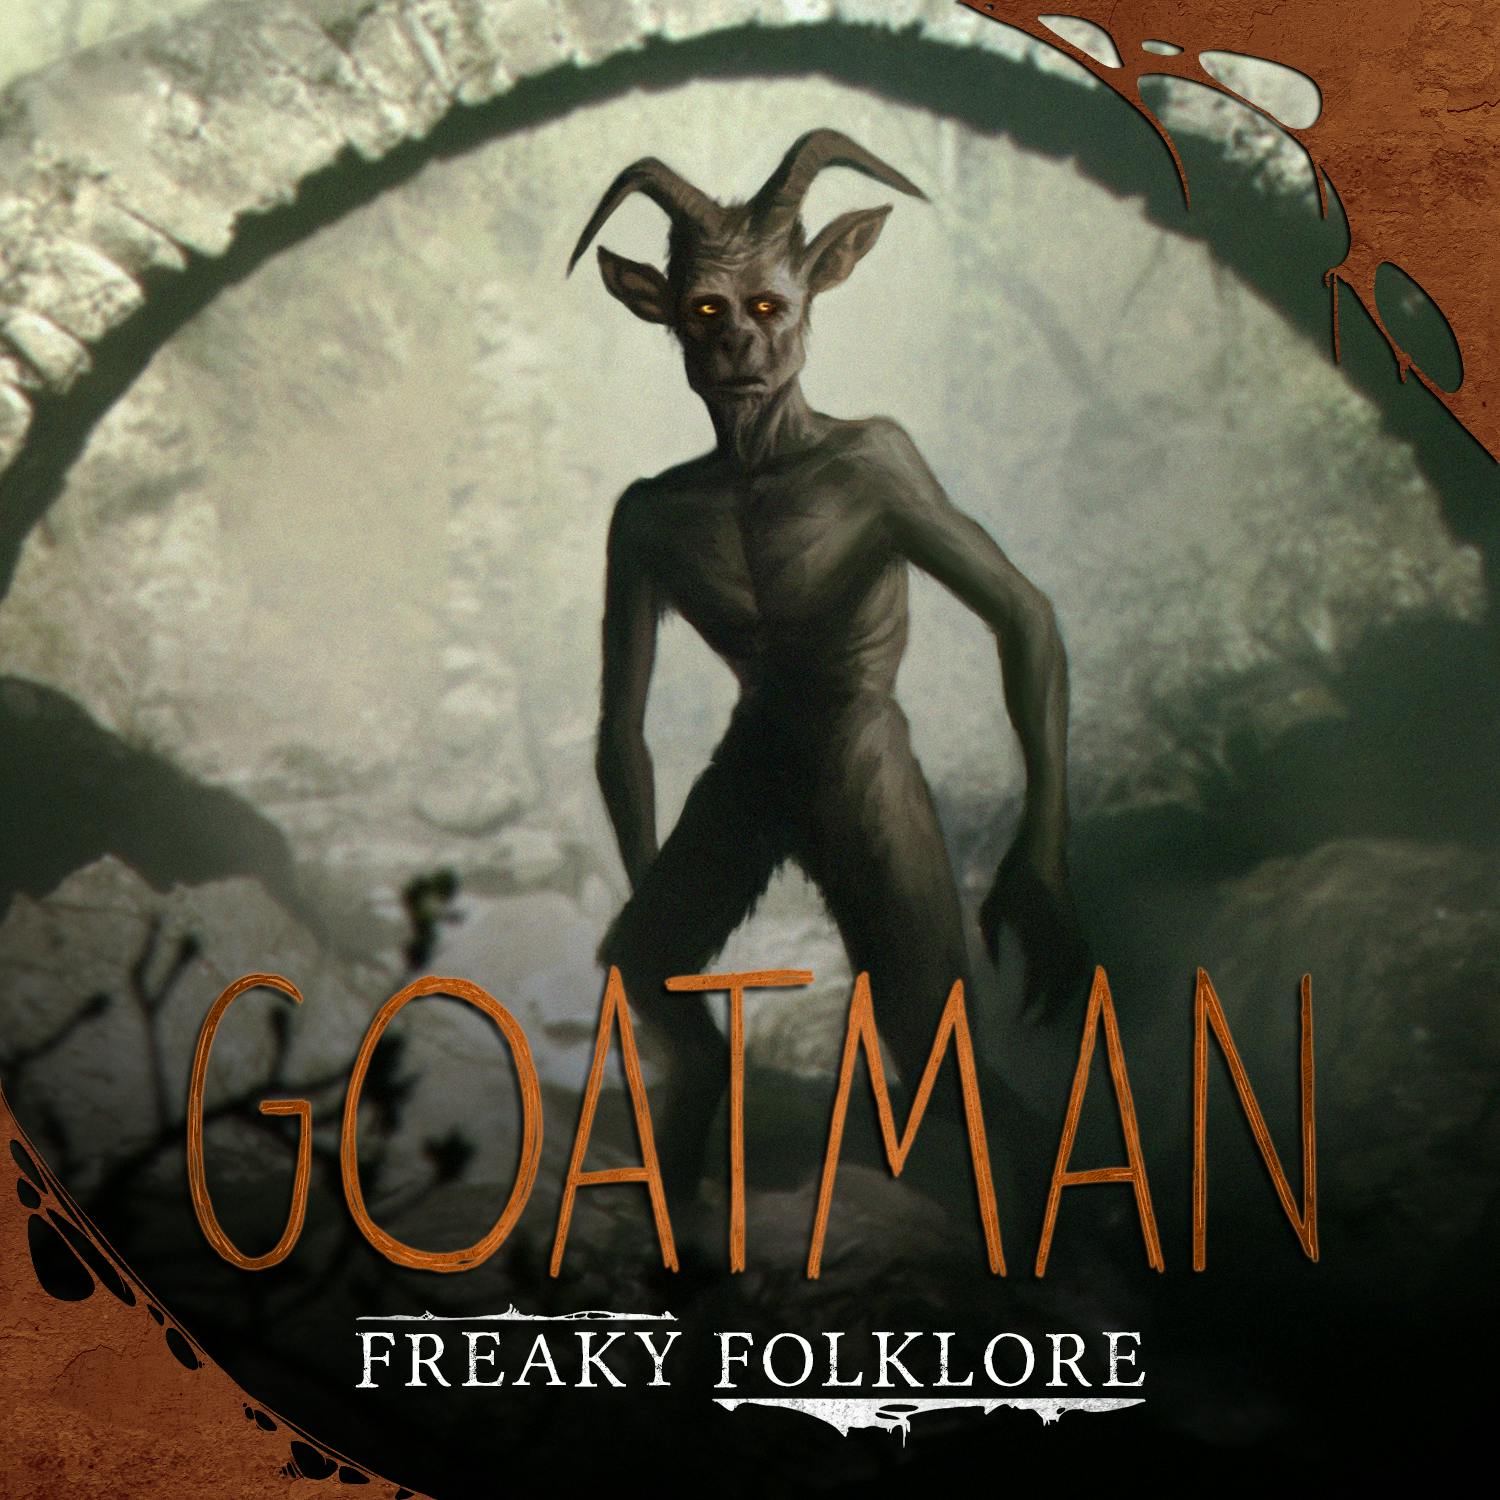 Goatman - The Psychotic Abomination